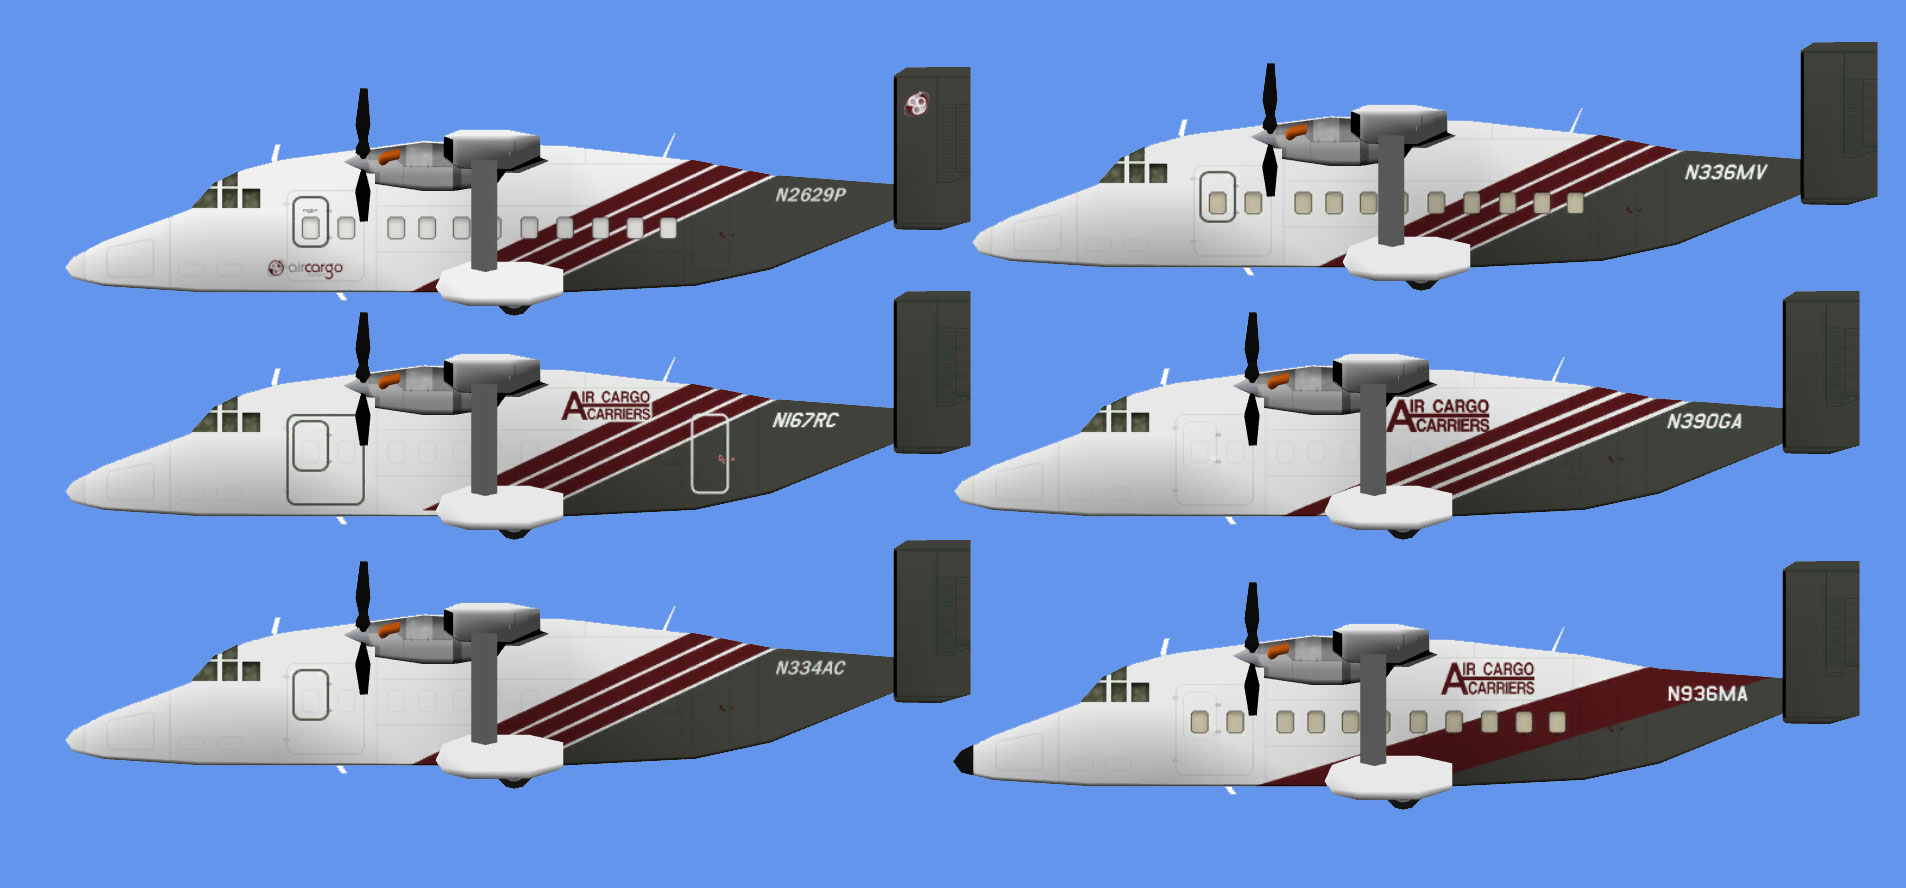 Air Cargo Carriers Shorts SD3-30